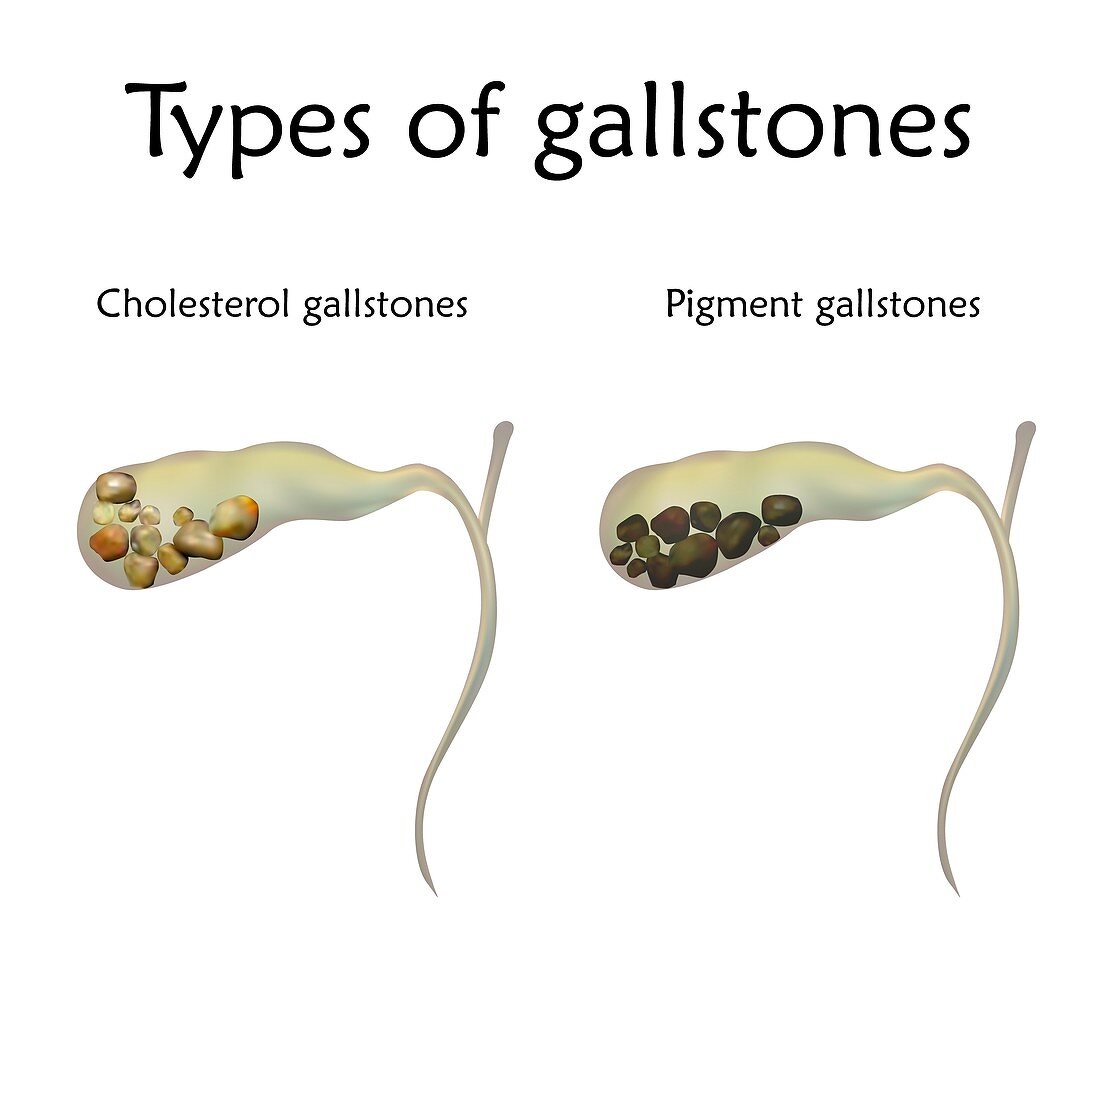 Types of gallstones, illustration